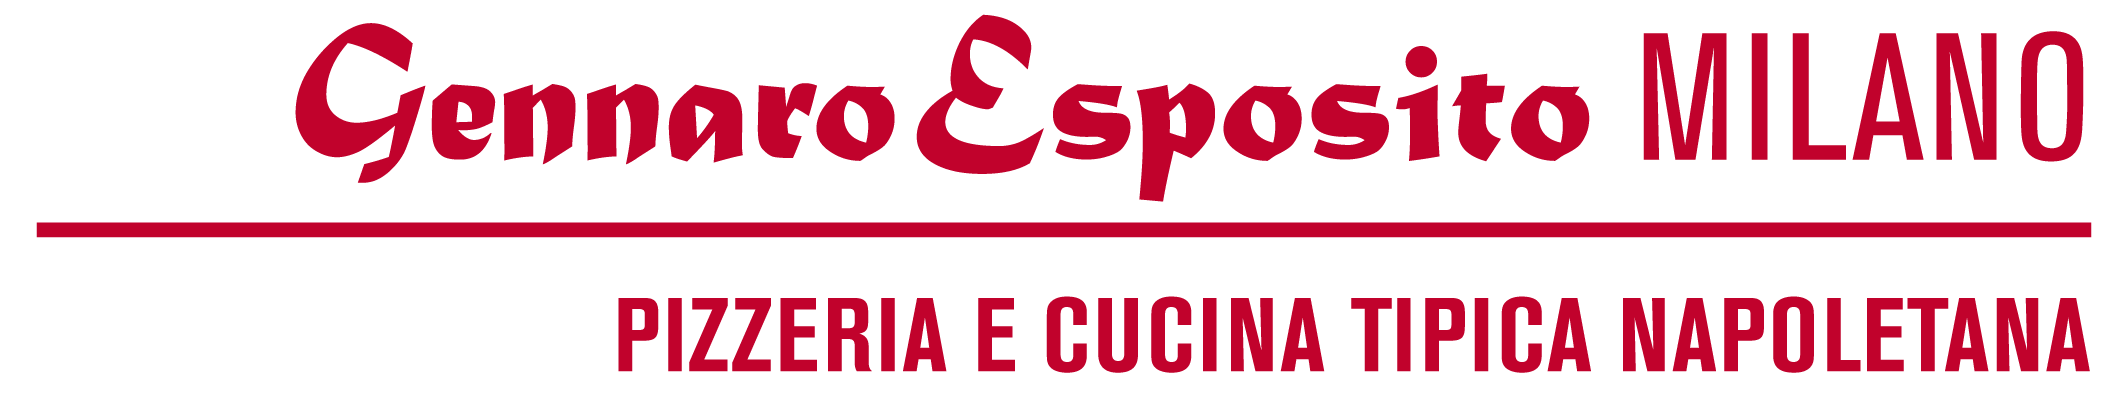 Gennaro Esposito Milano